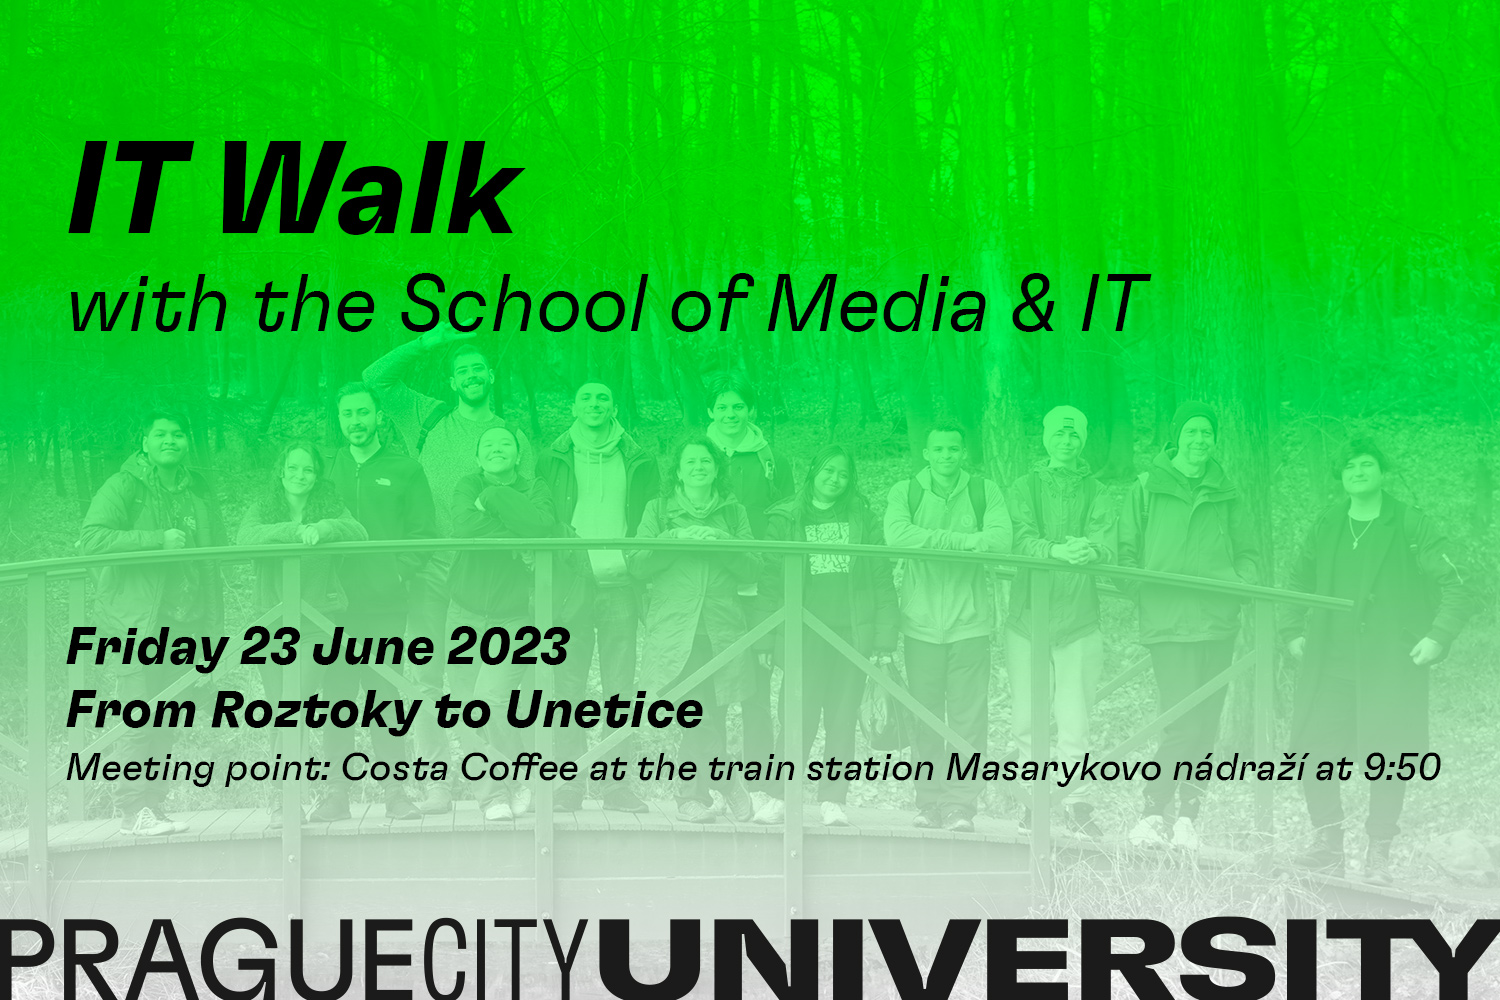 Dean of School of Media & IT invites you for IT Walk on 23 June 2023